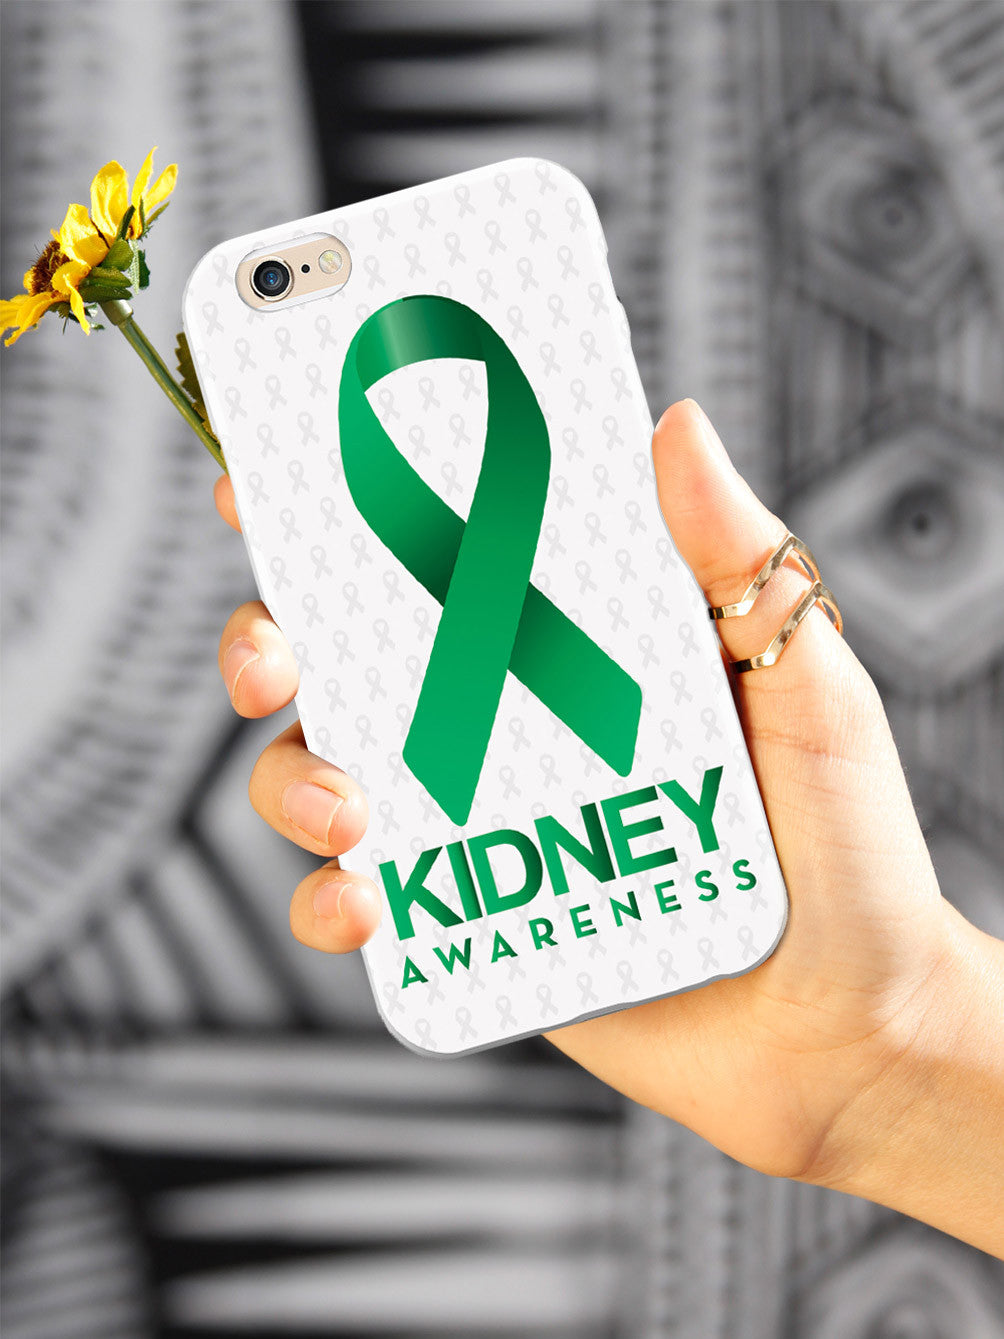 Kidney Awareness - Awareness Ribbon - White Case